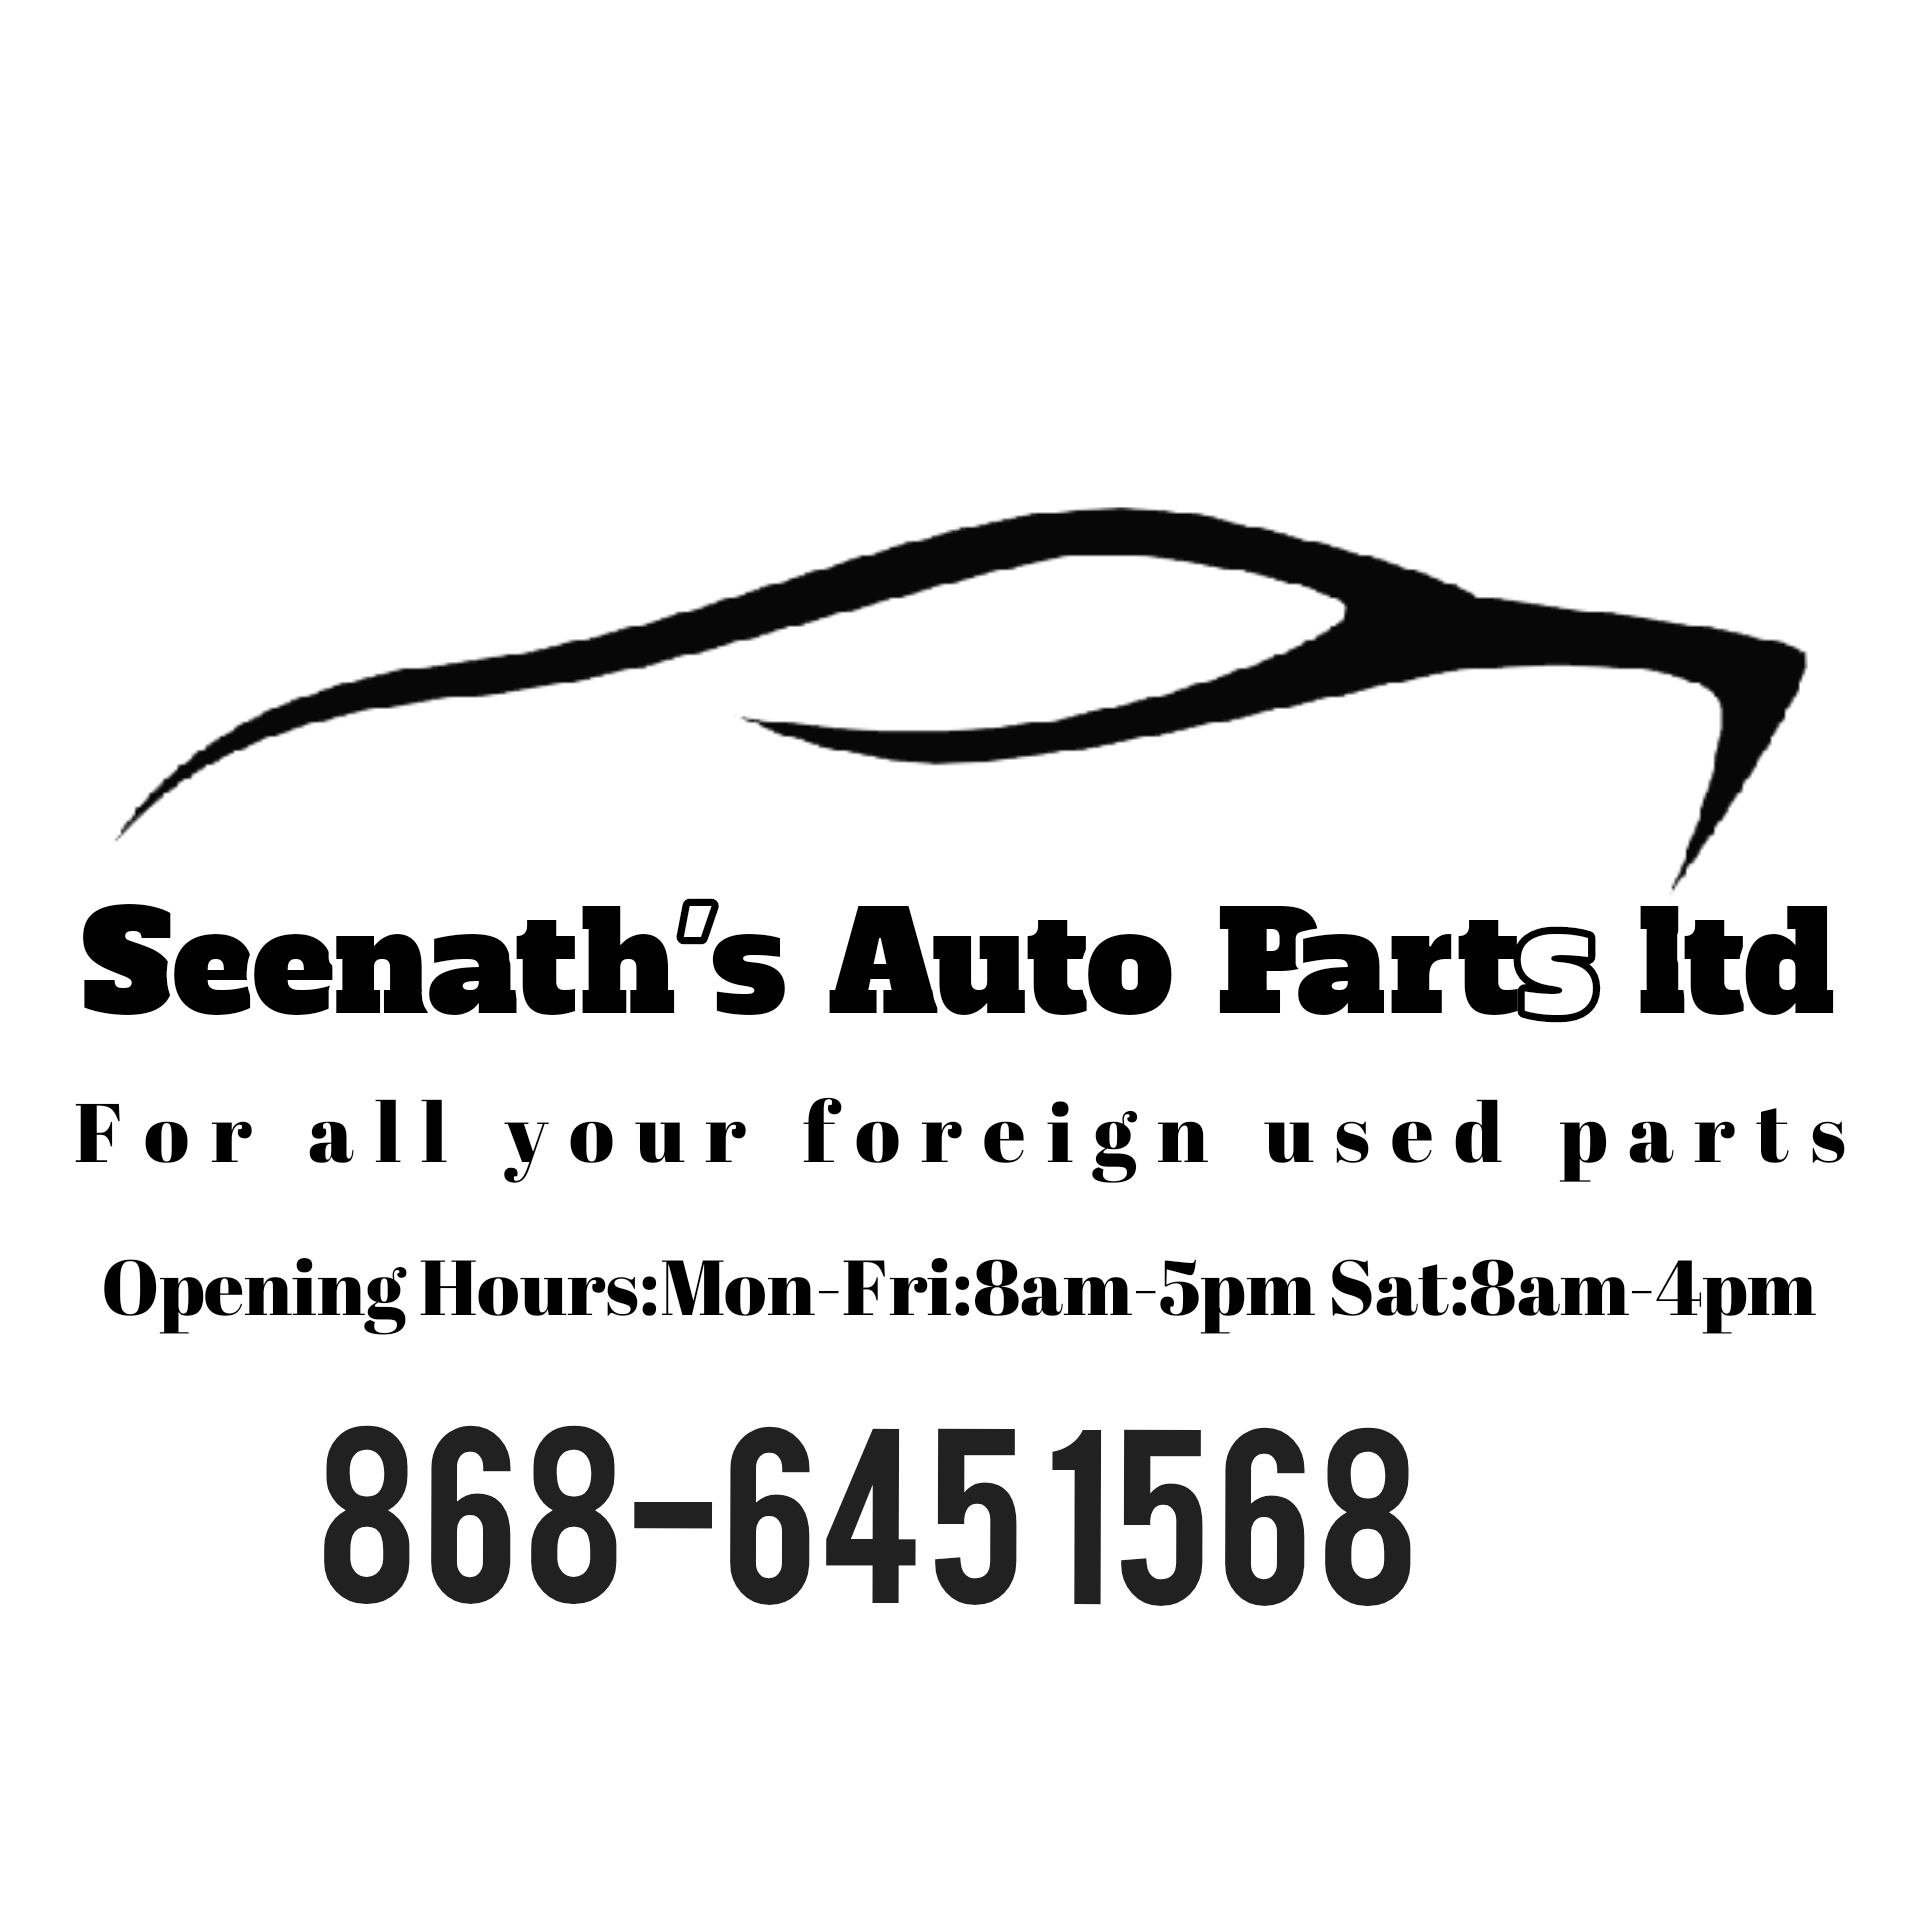 Seenath's Auto Parts ltd 